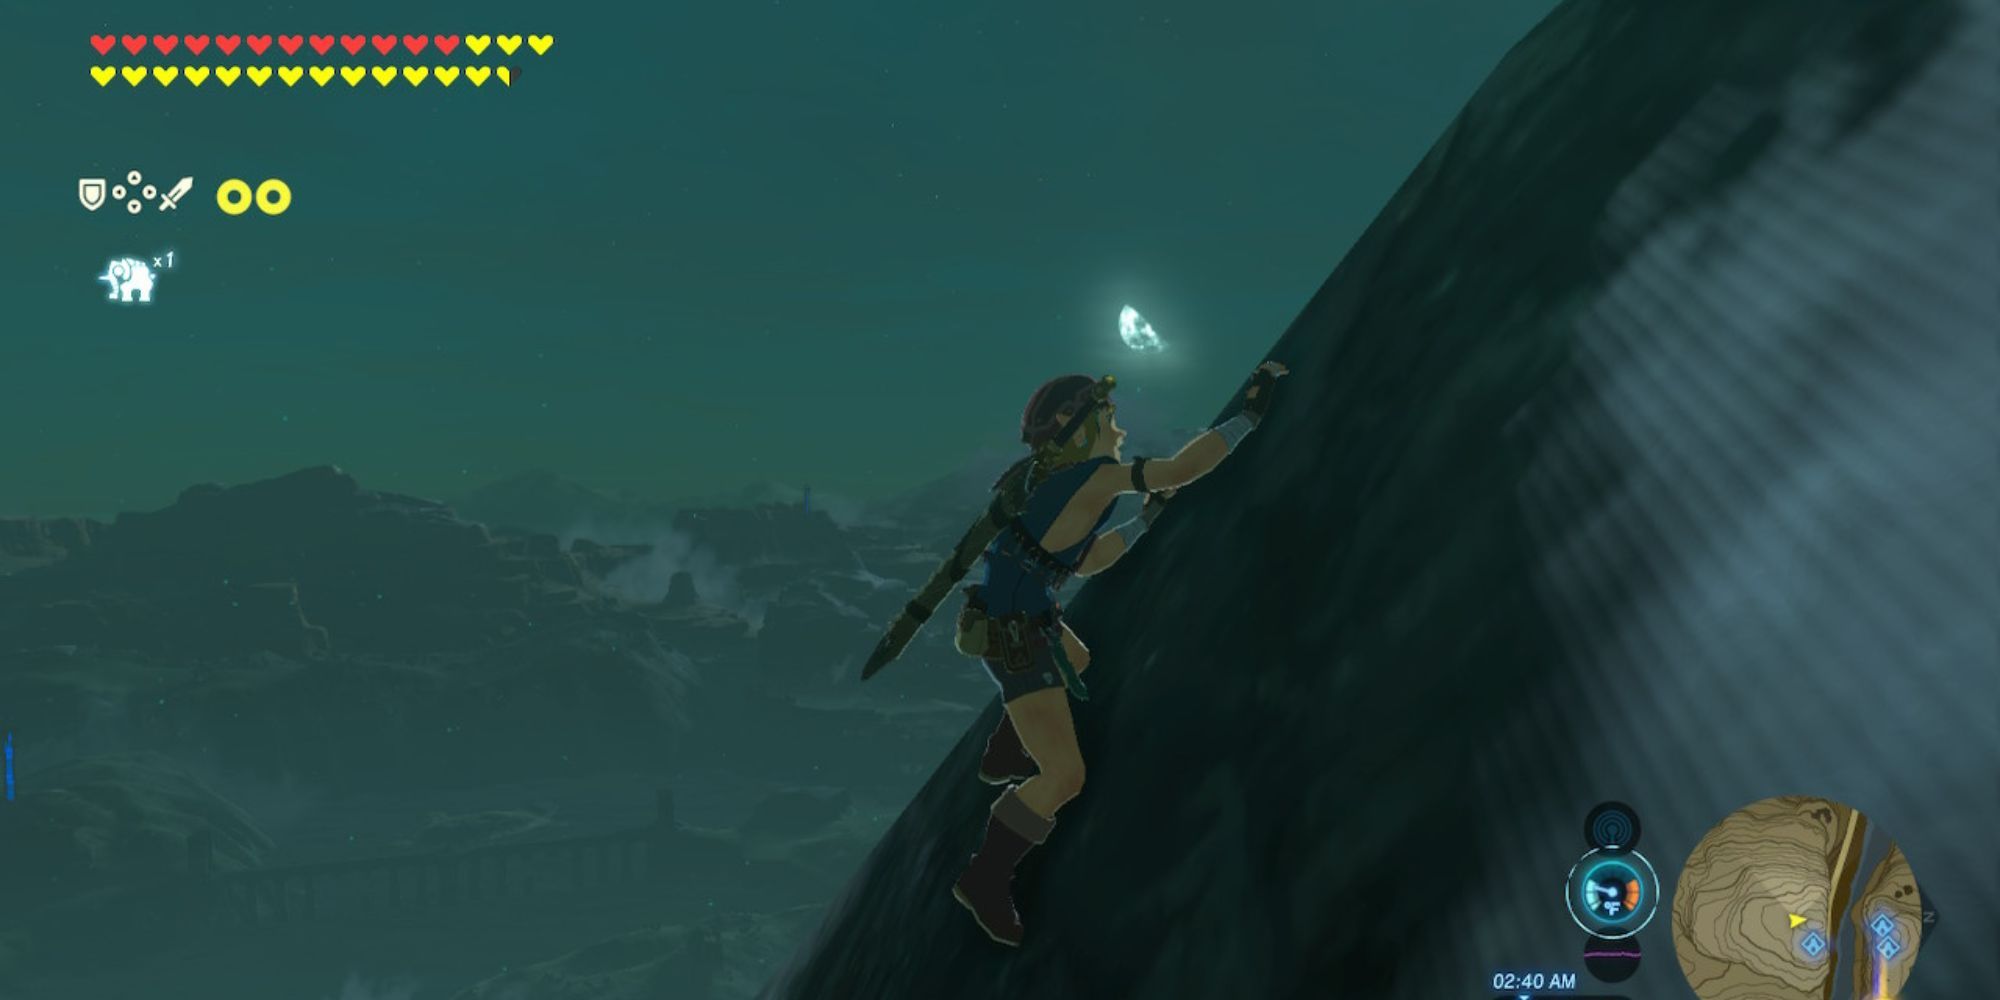 Link climbs a mountain at night